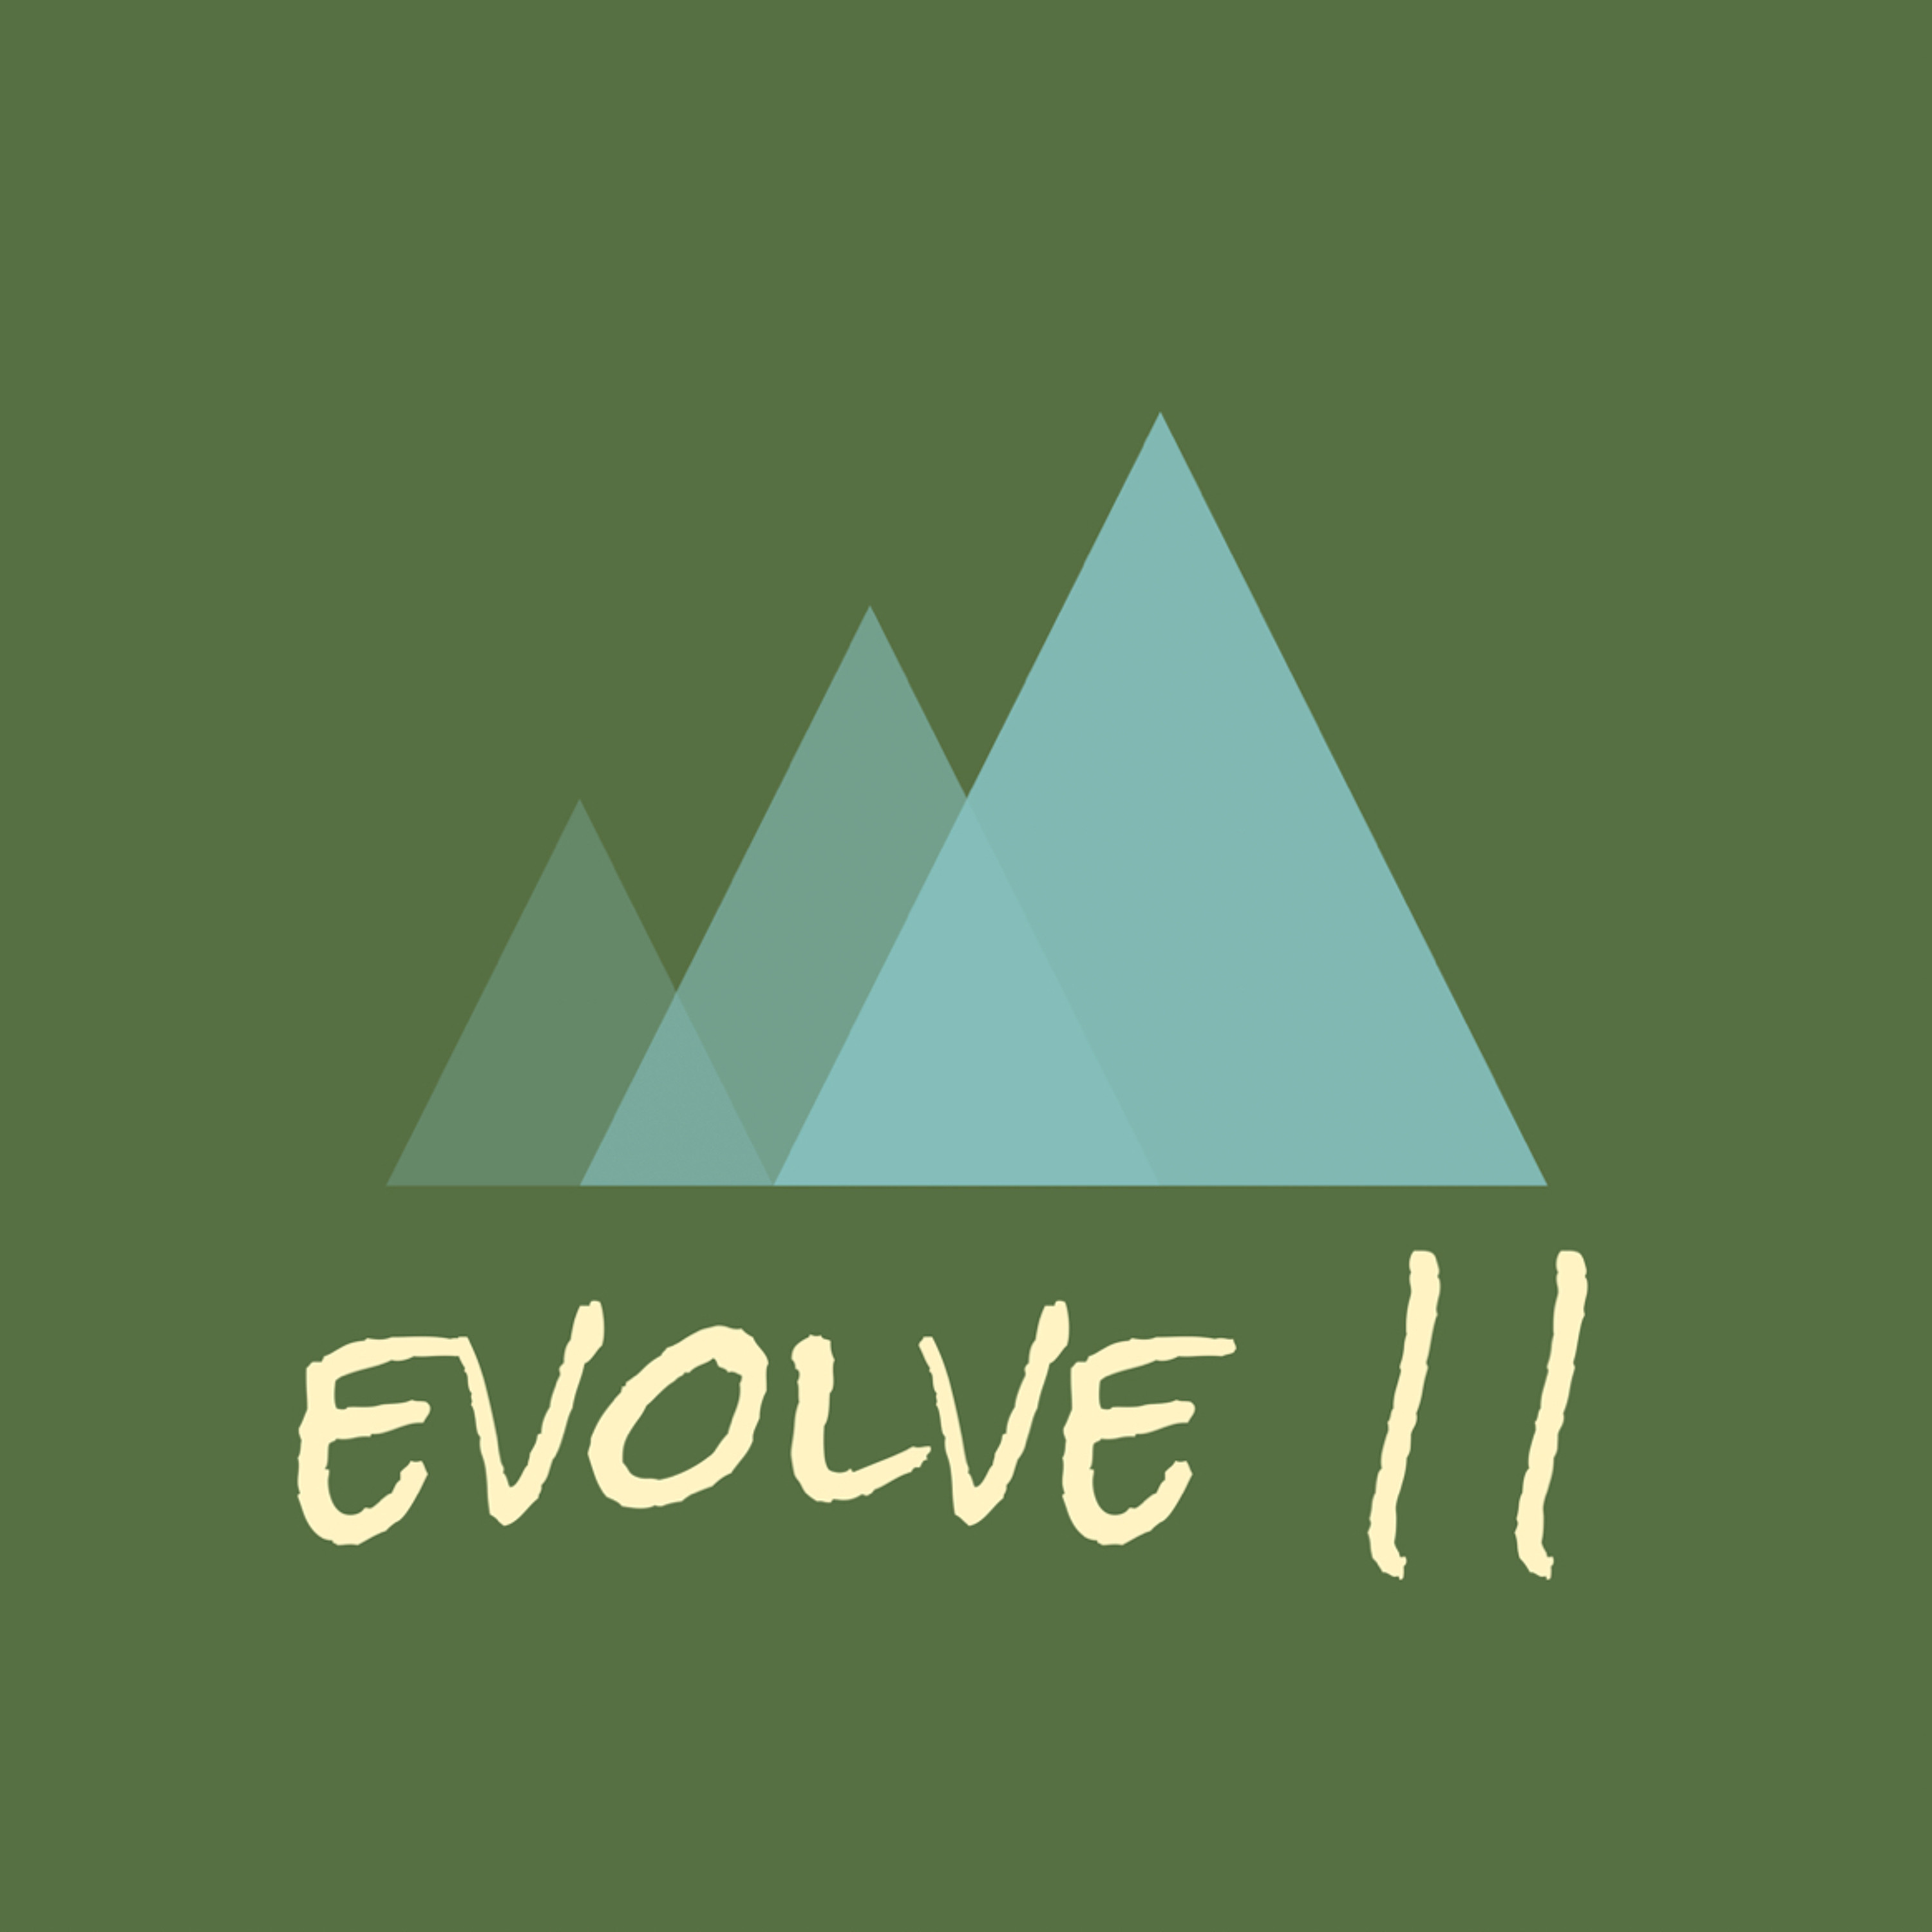 evolve 11